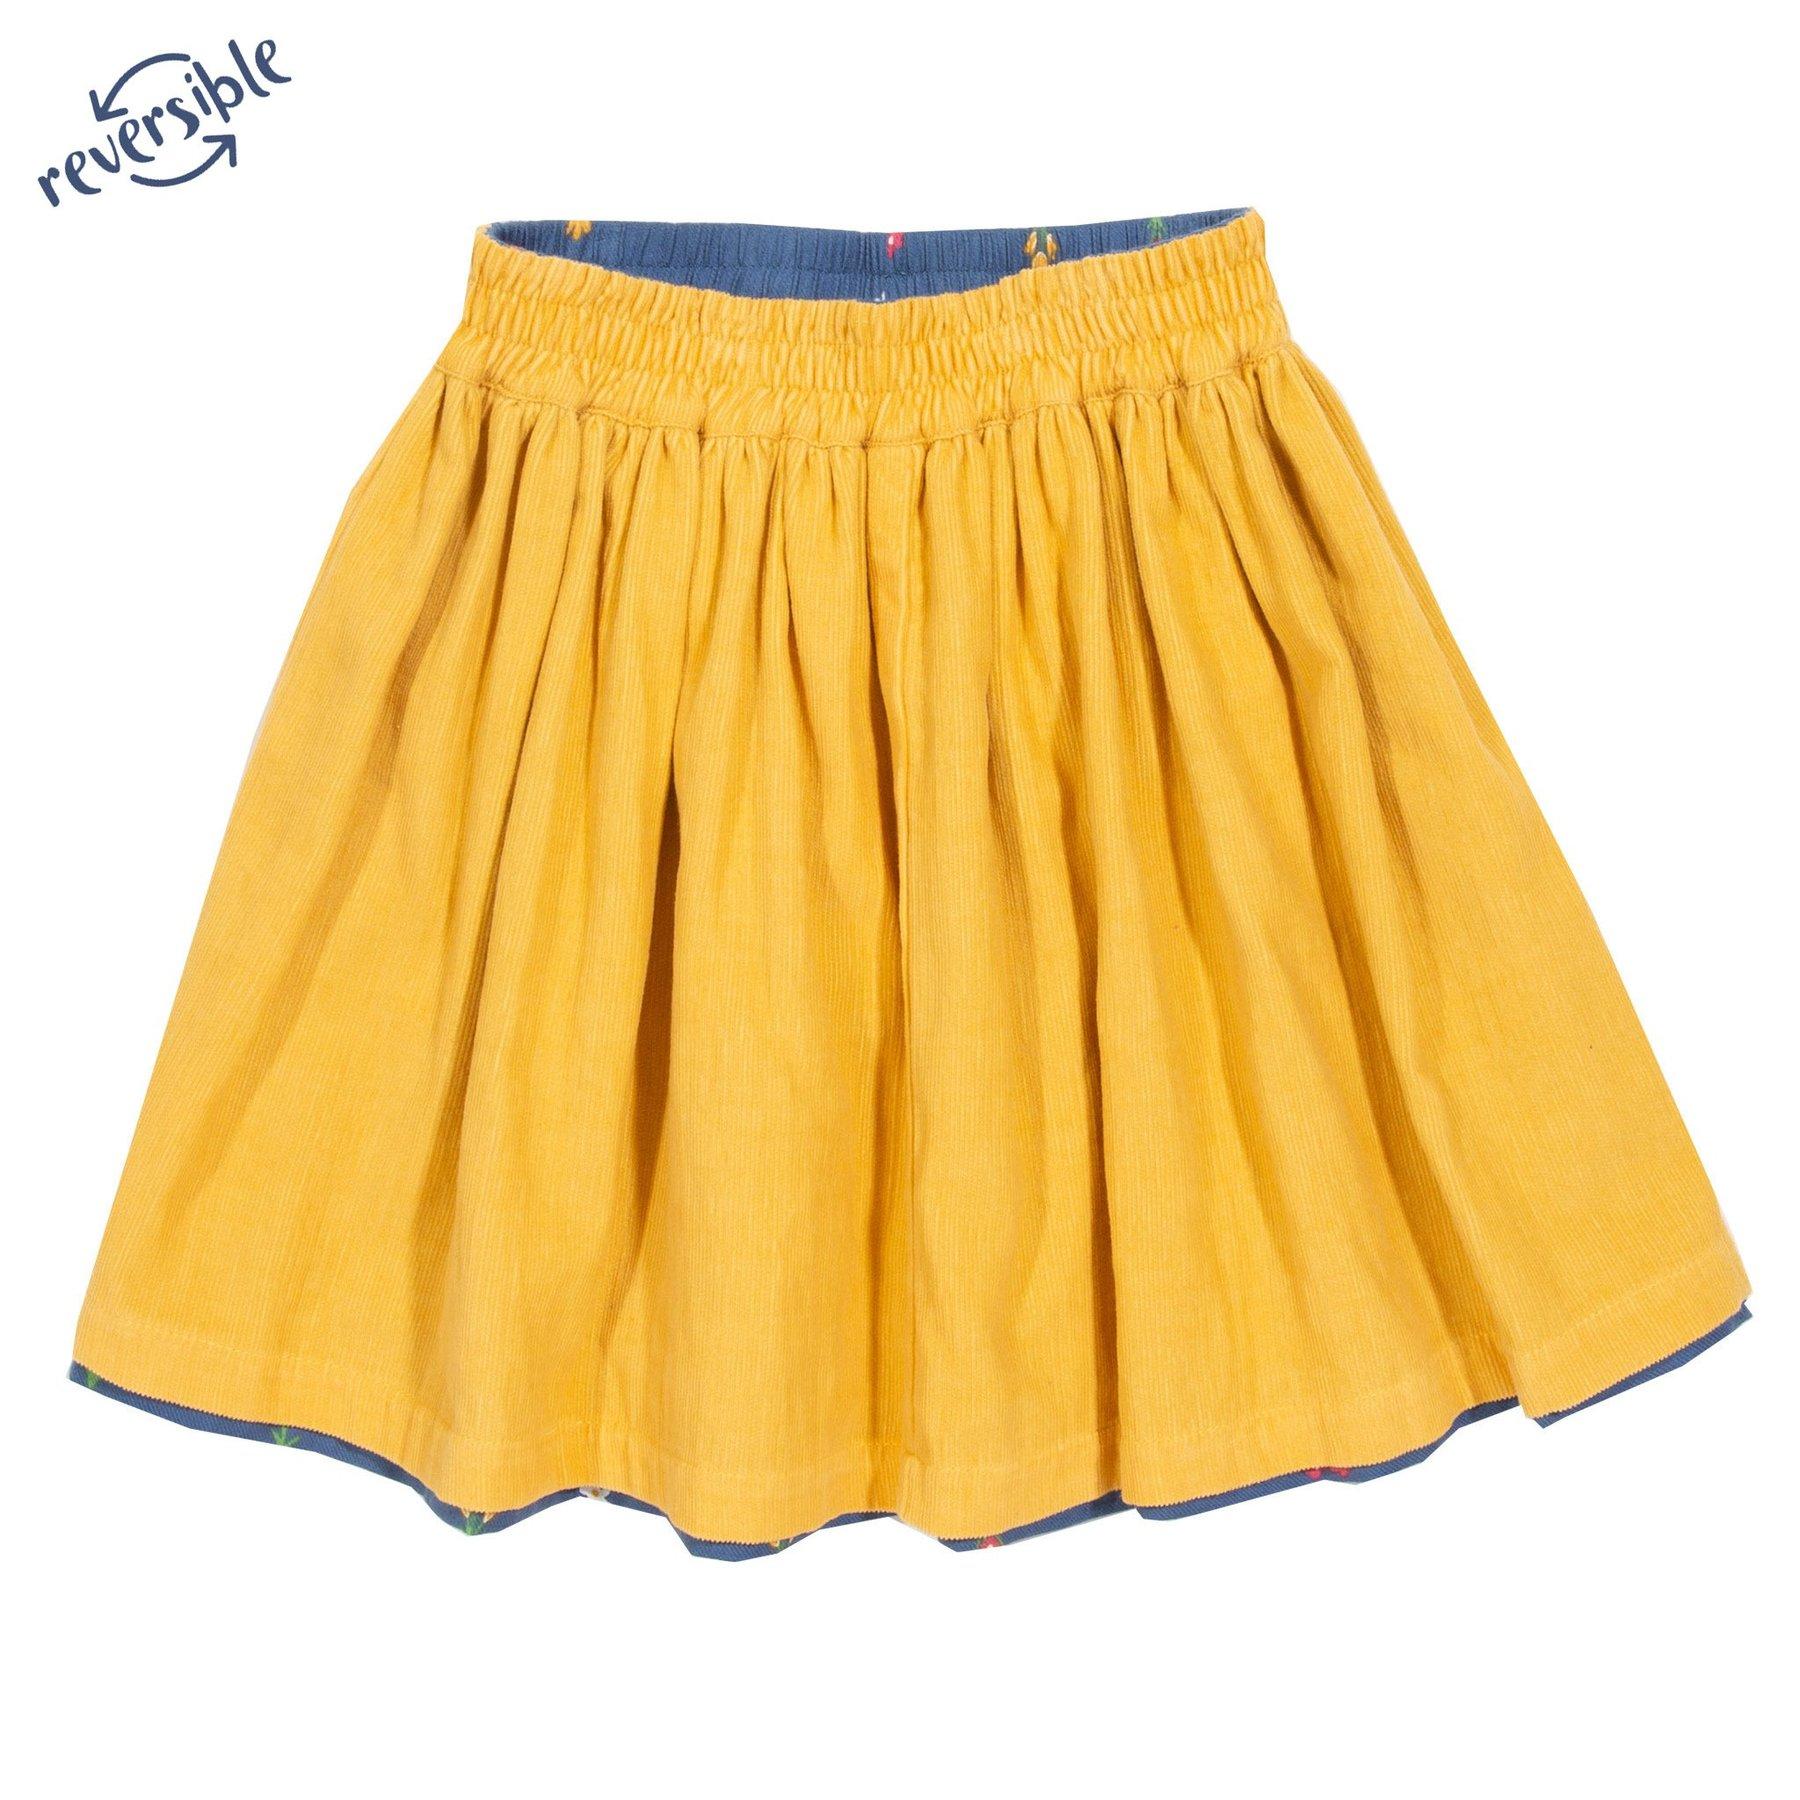 Kite Clothing Posey Reversible Skirt yellow